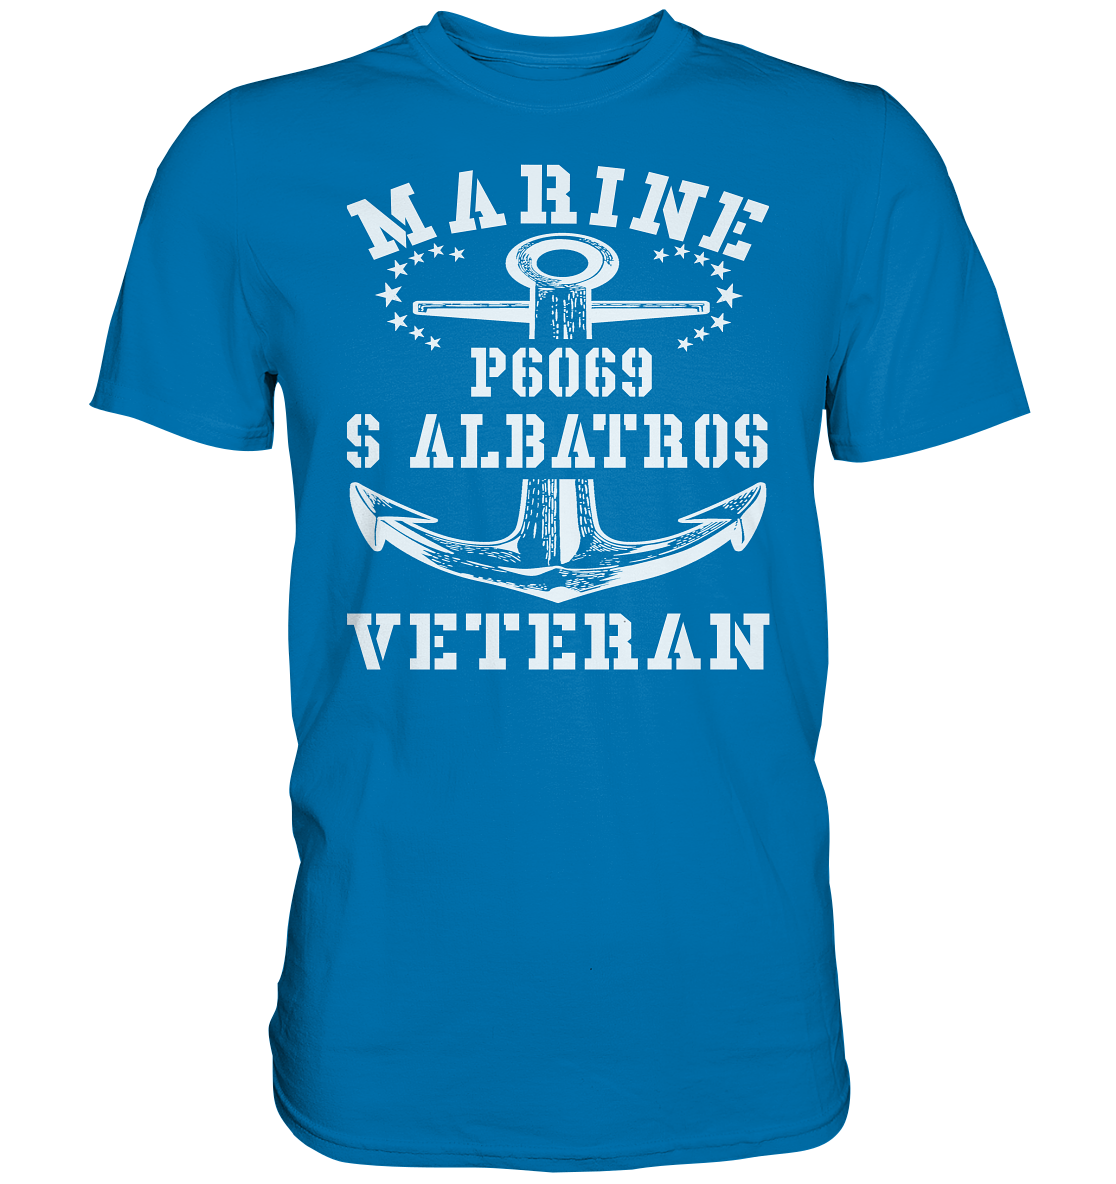 P6069 S ALBATROS Marine Veteran - Premium Shirt